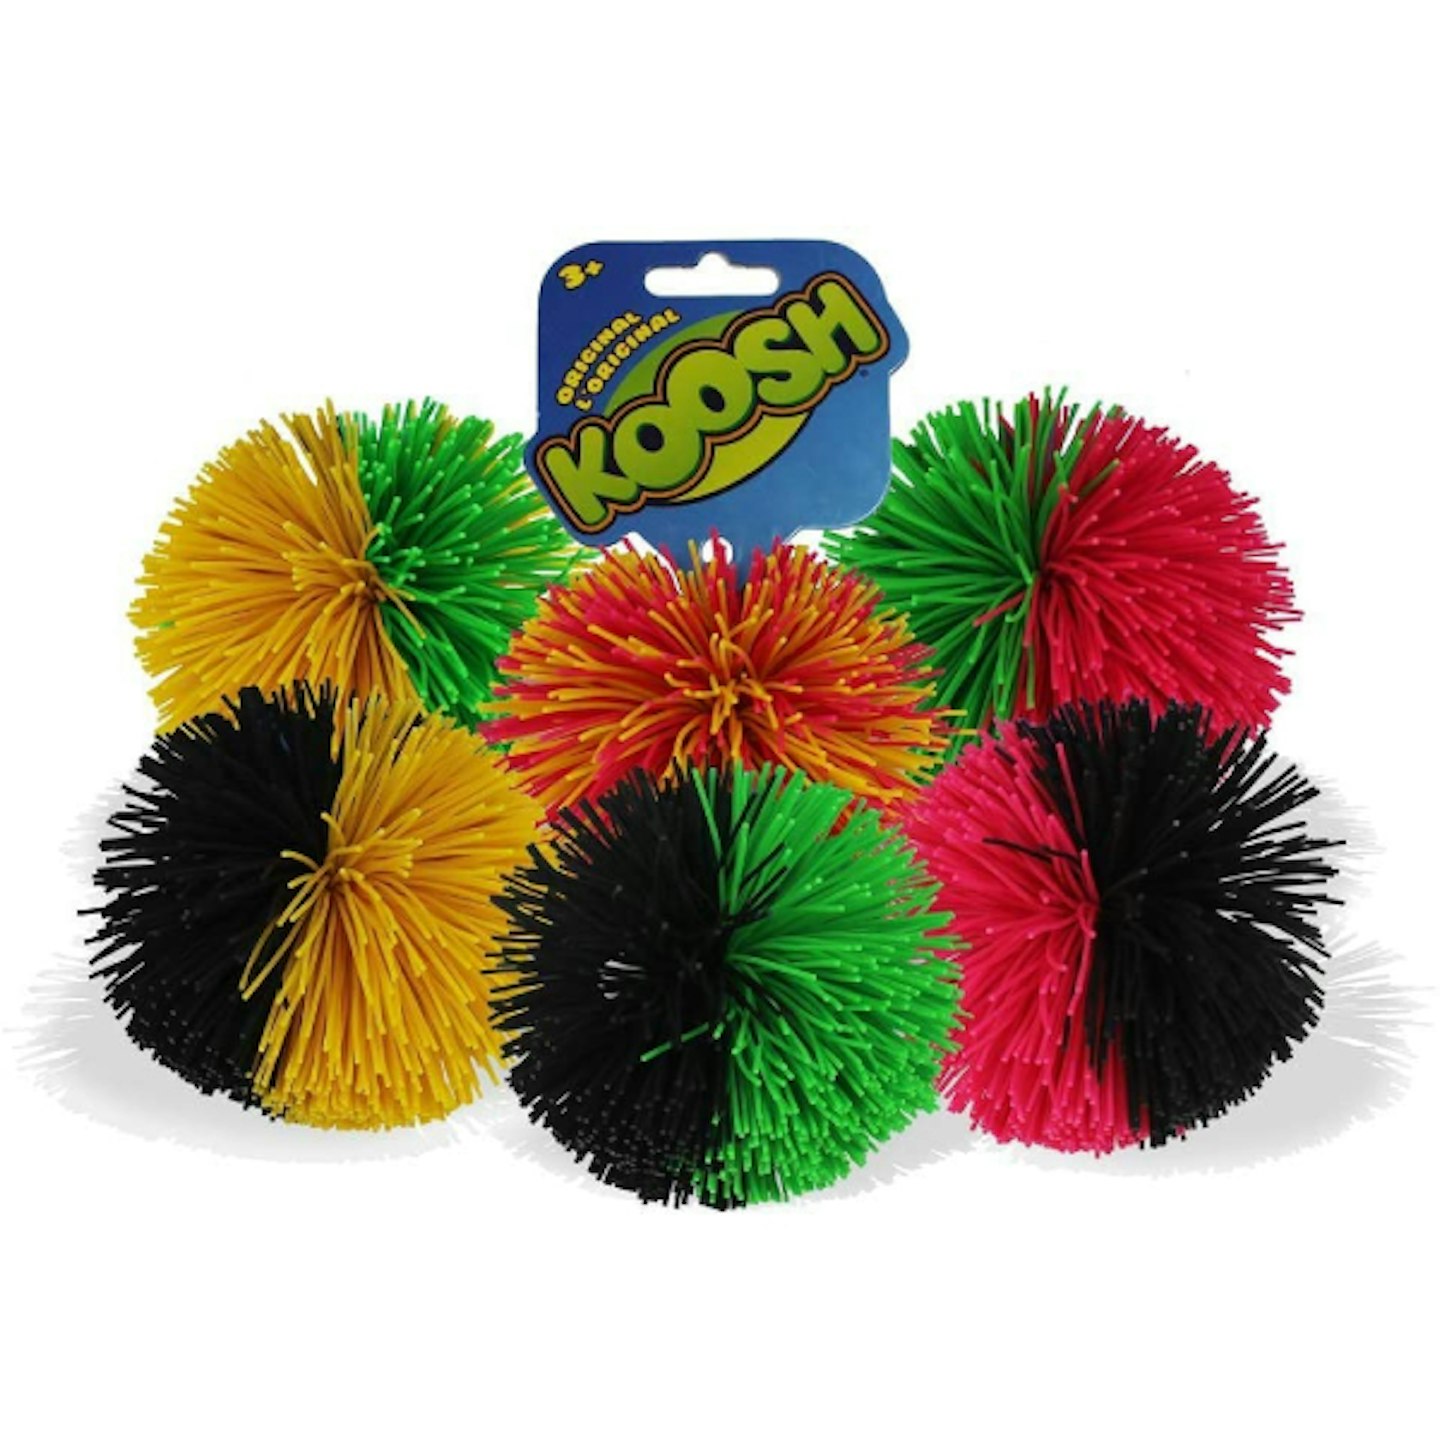 80s Koosh ball toys